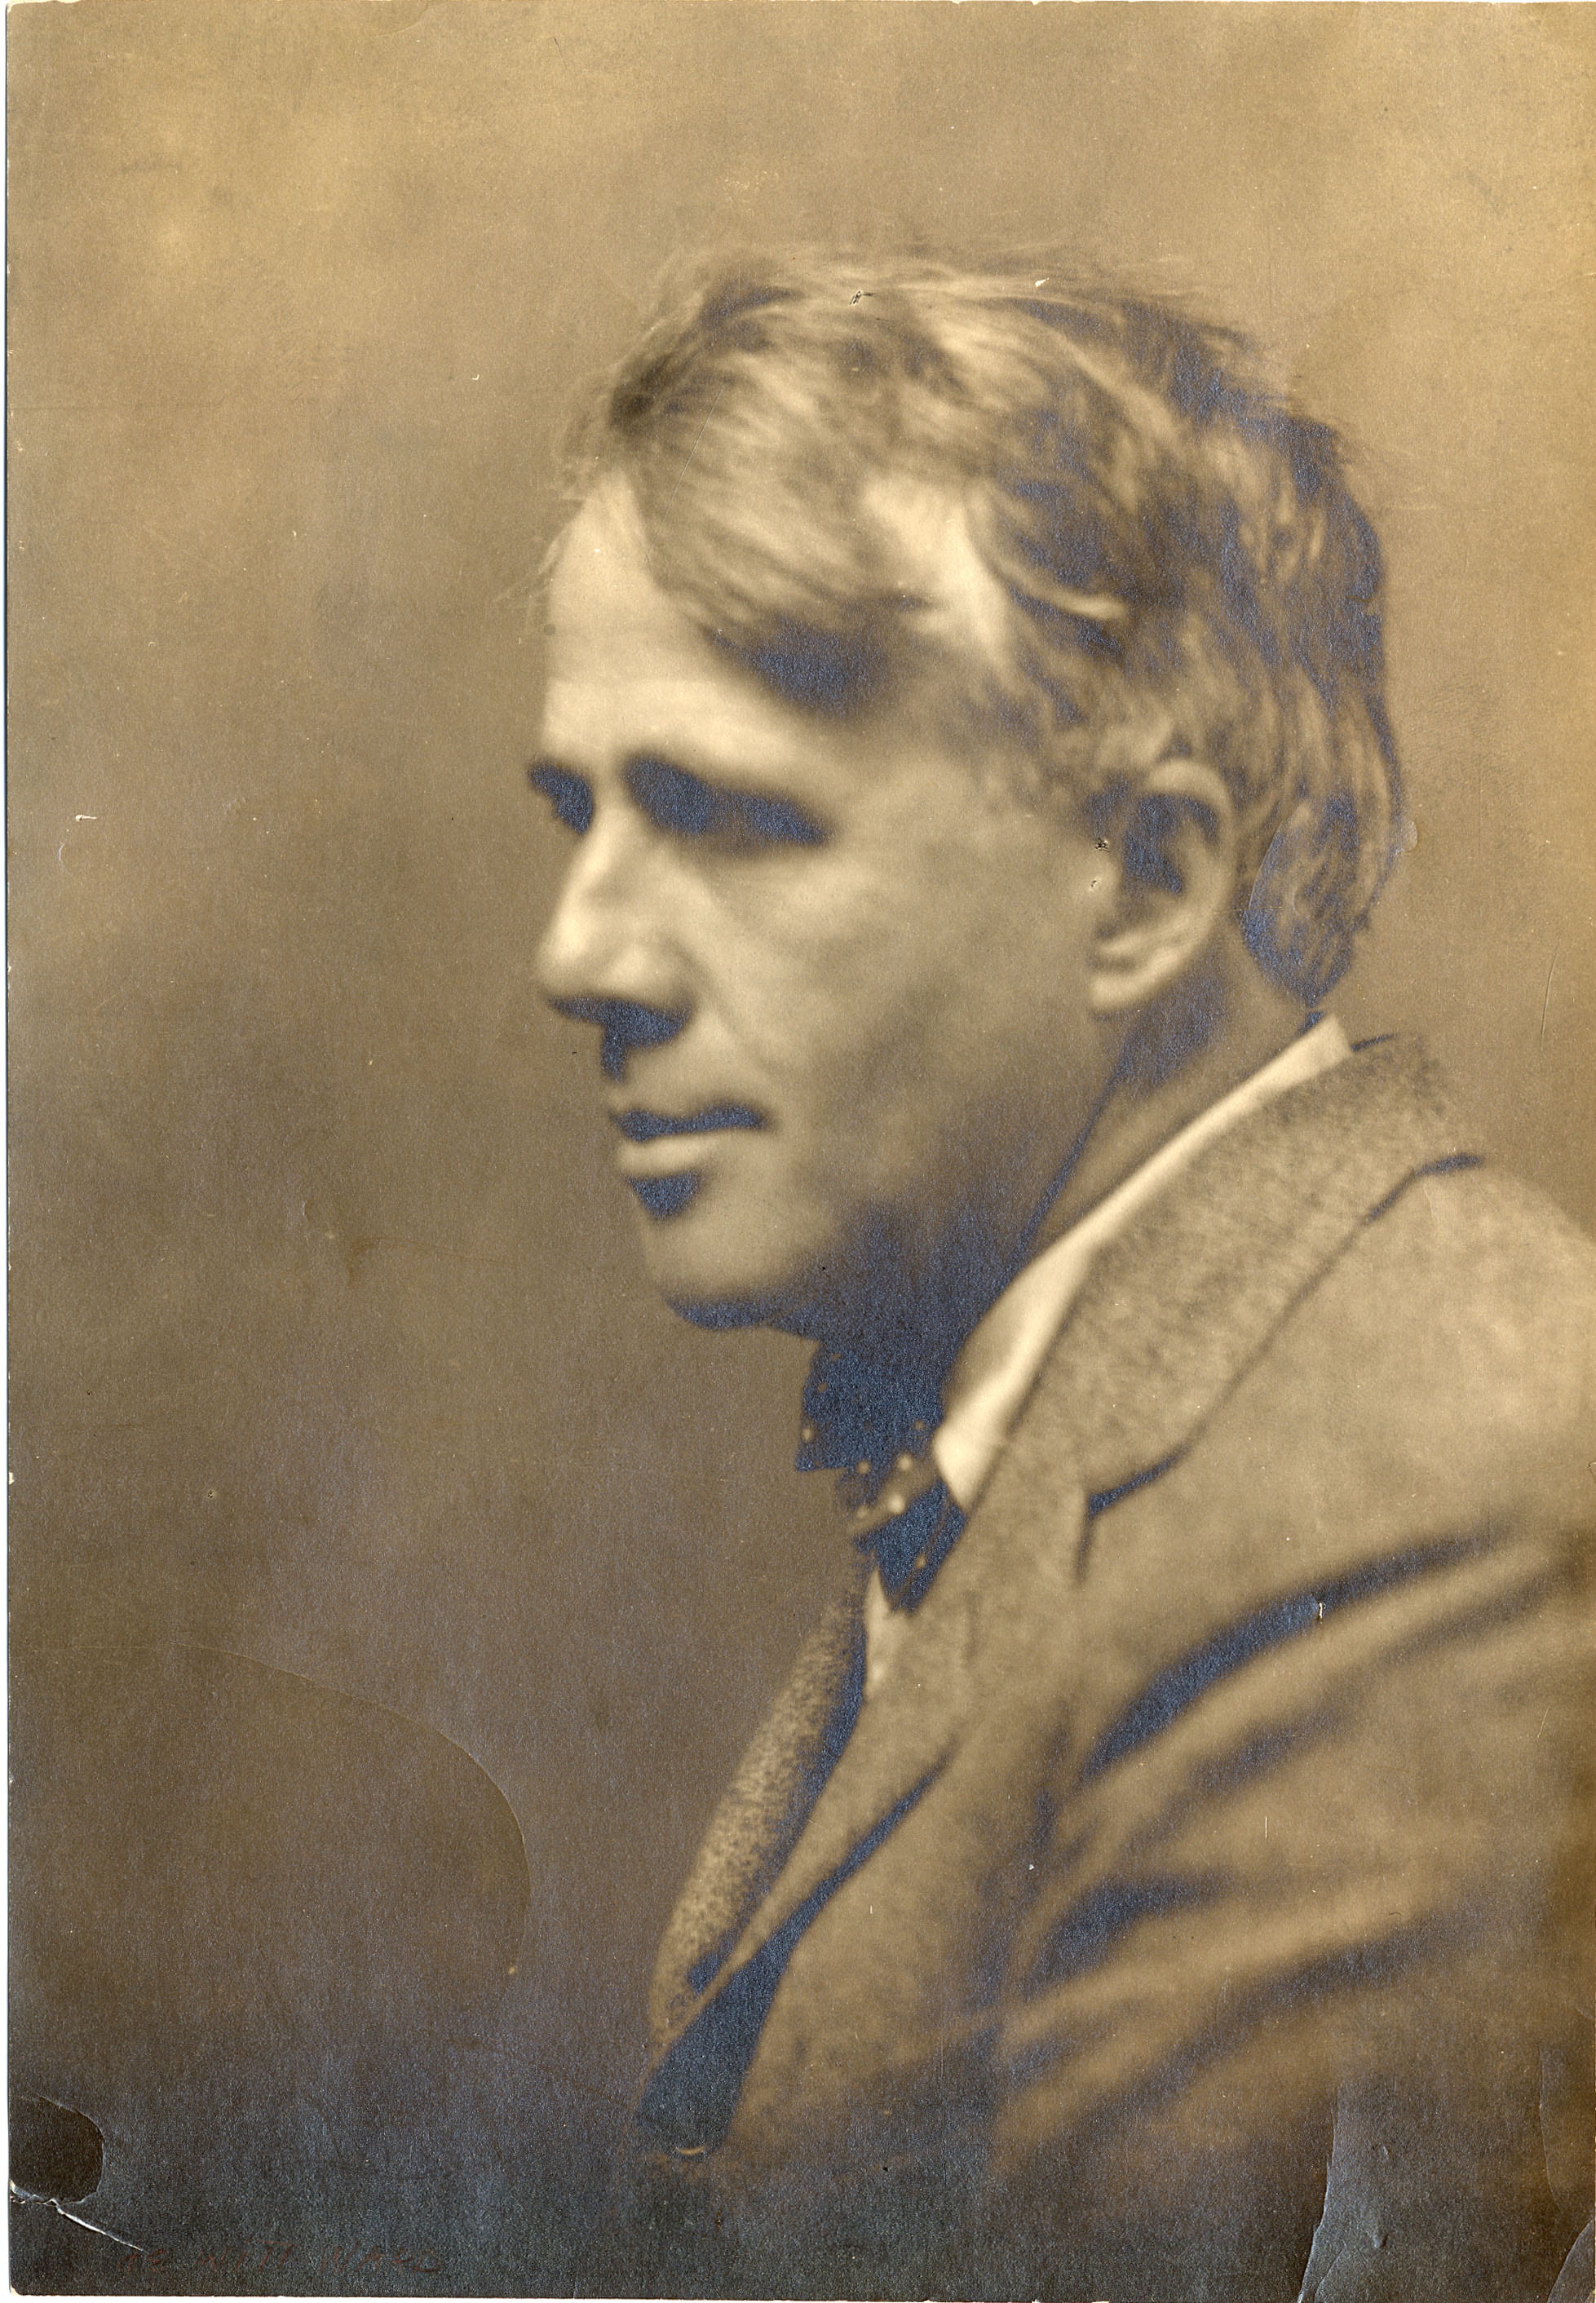 Photographic portrait of Robert Frost